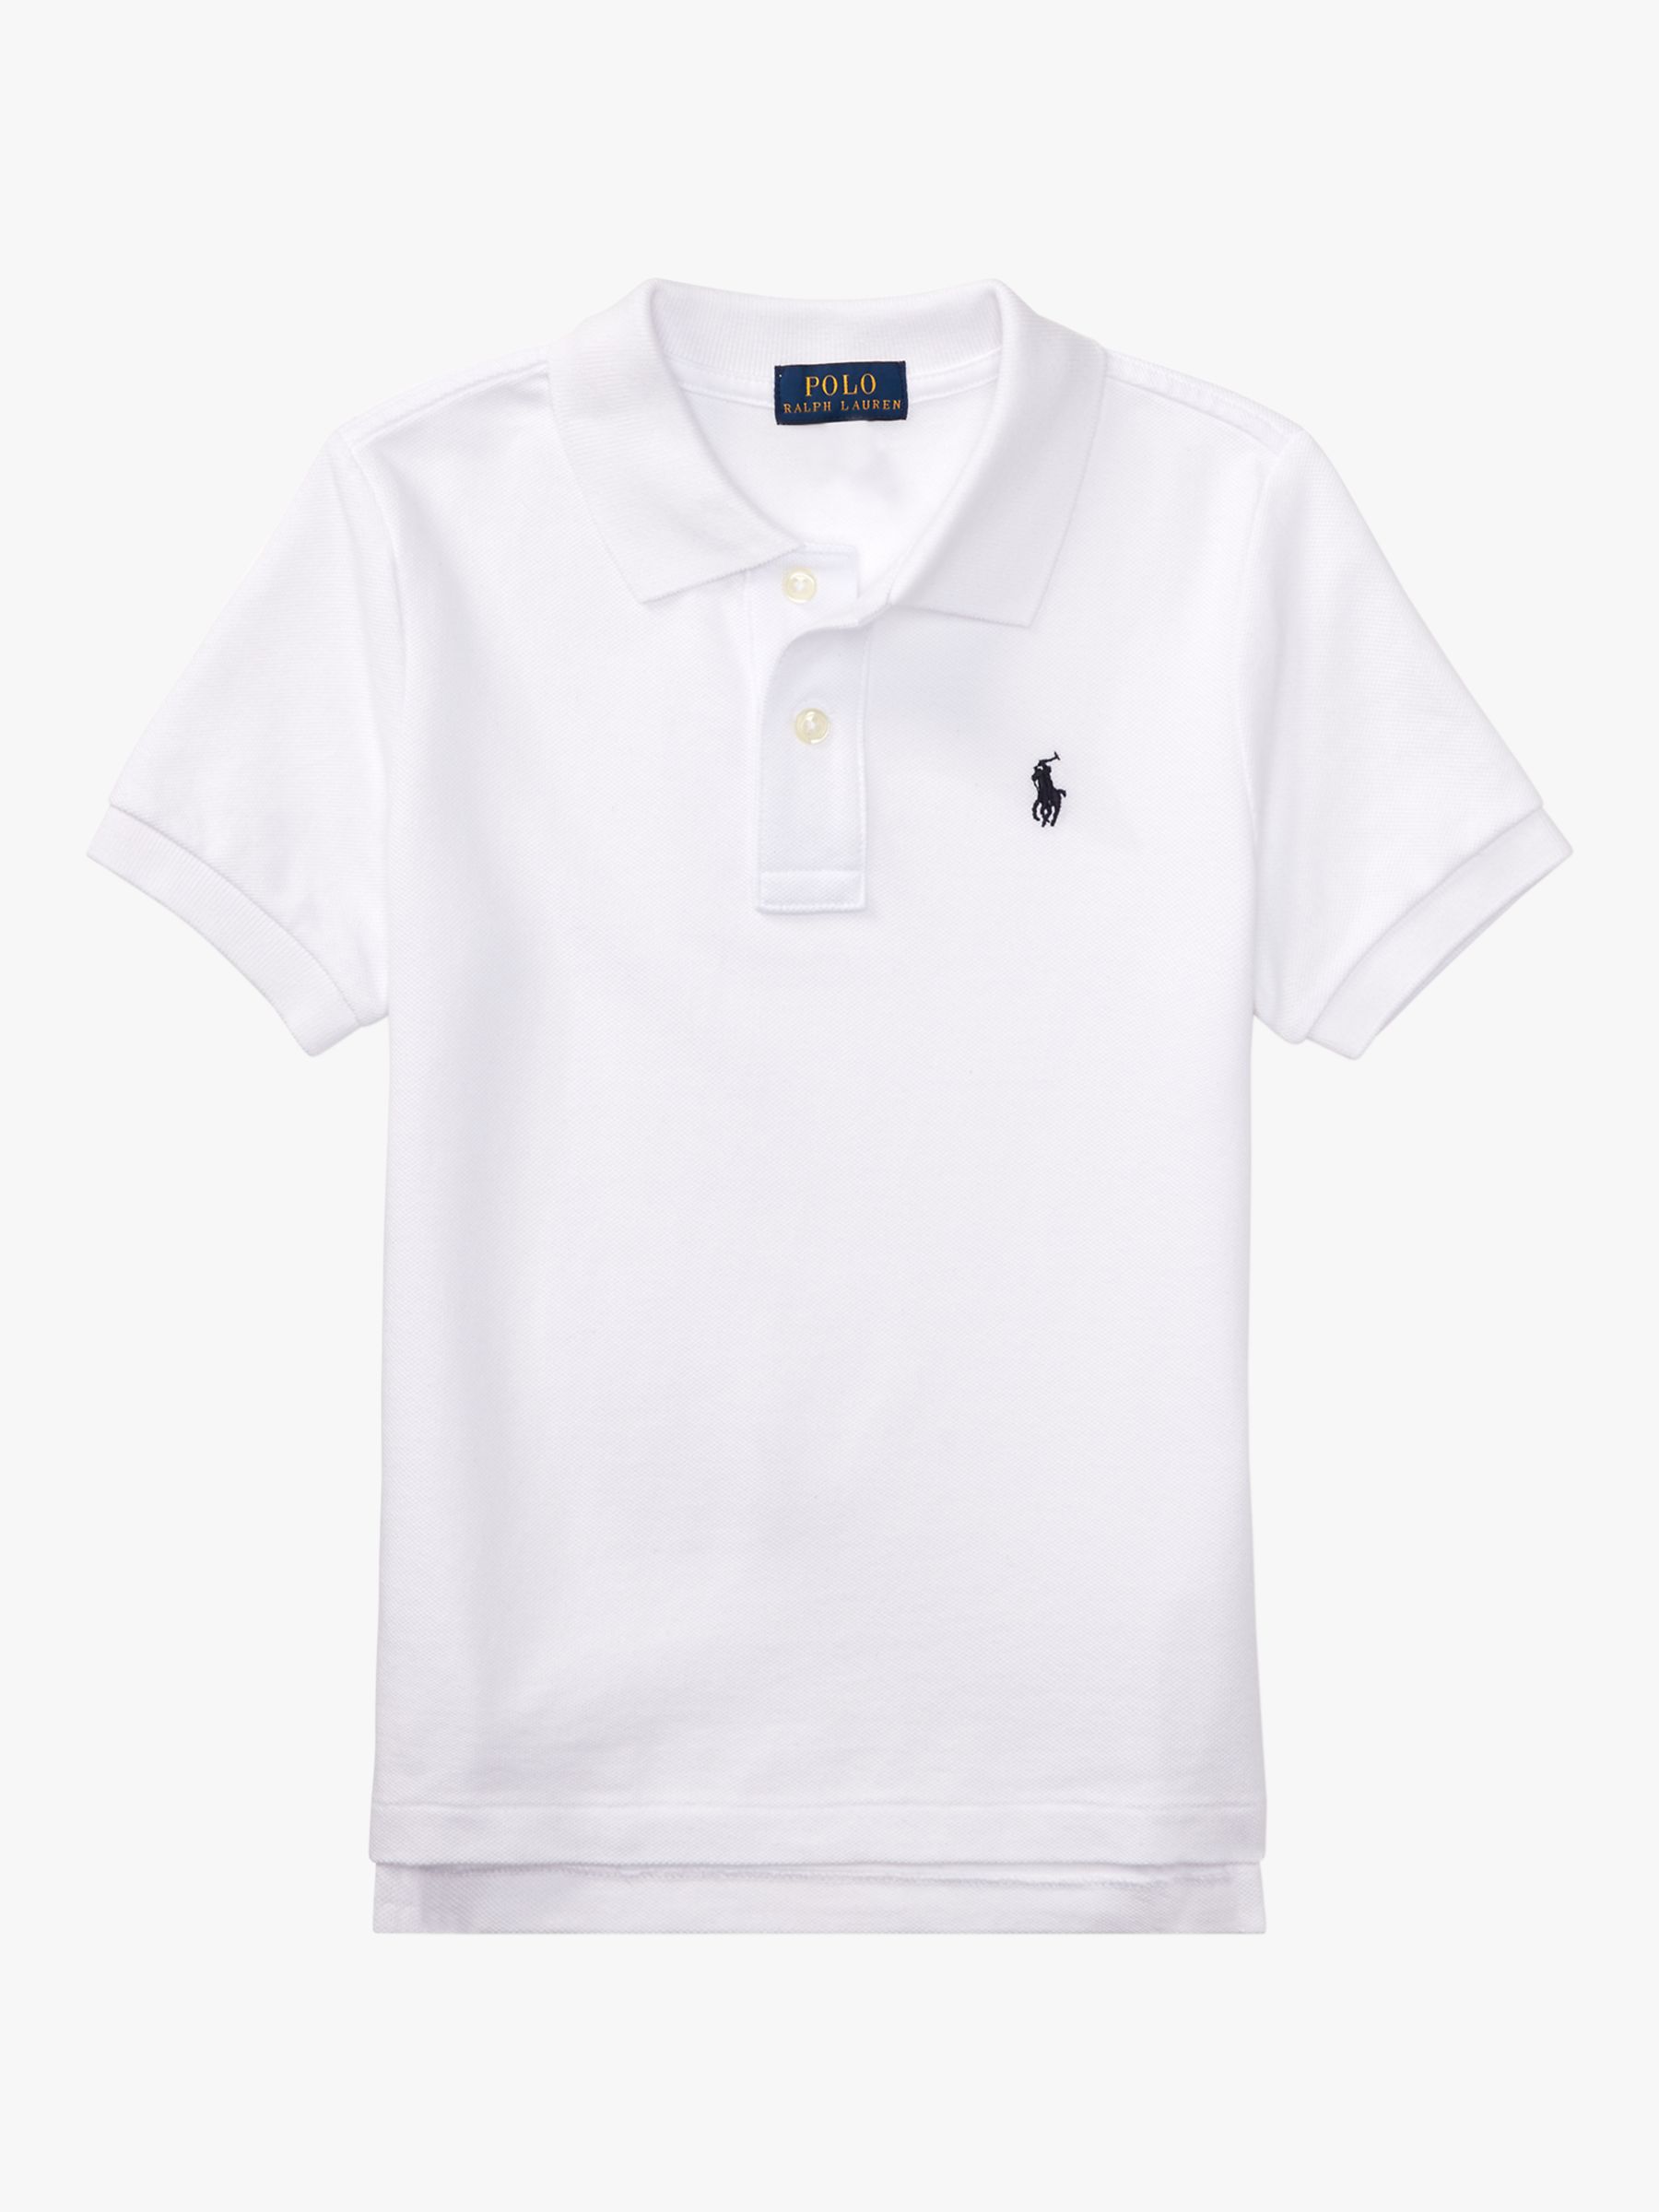 Polo Ralph Lauren Kids' Polo Shirt, White at John Lewis & Partners